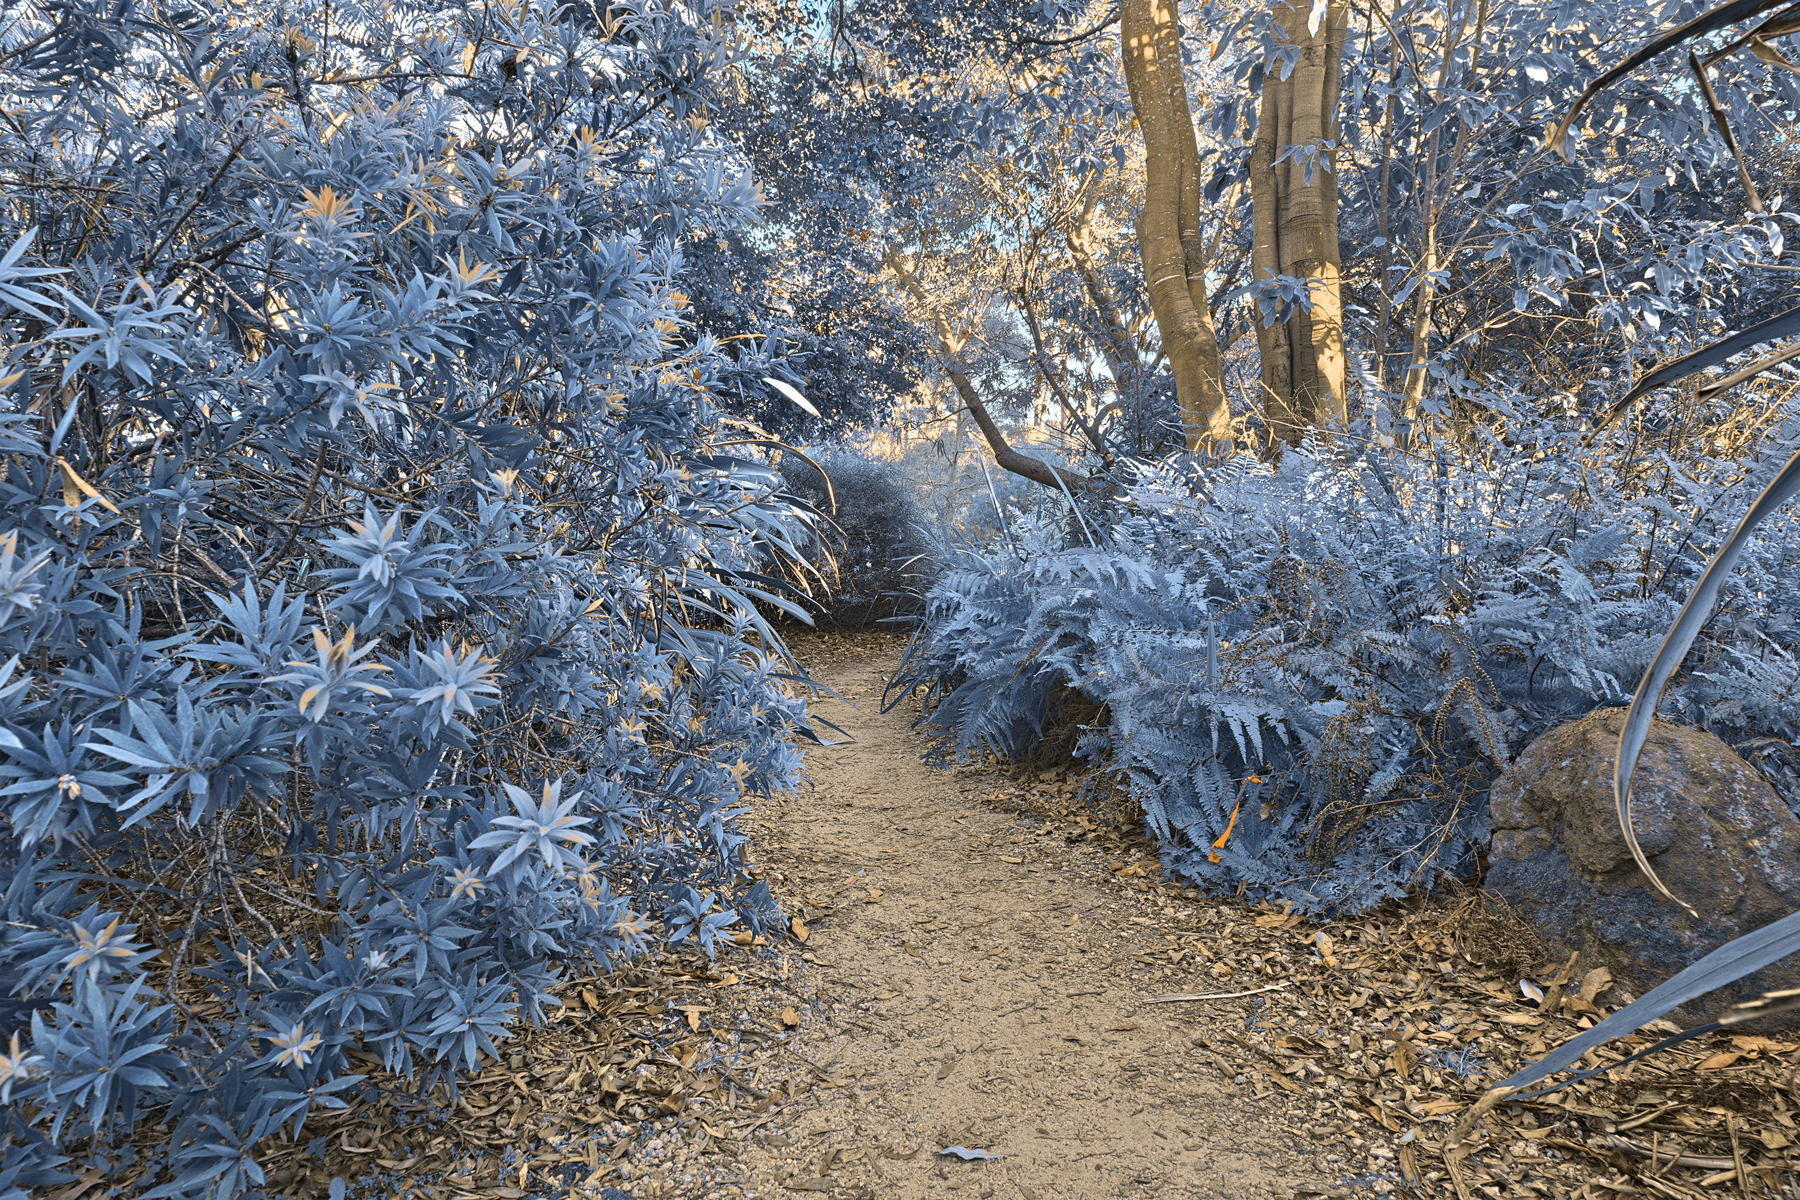 Botanical gardens trail - winter blue hd photo